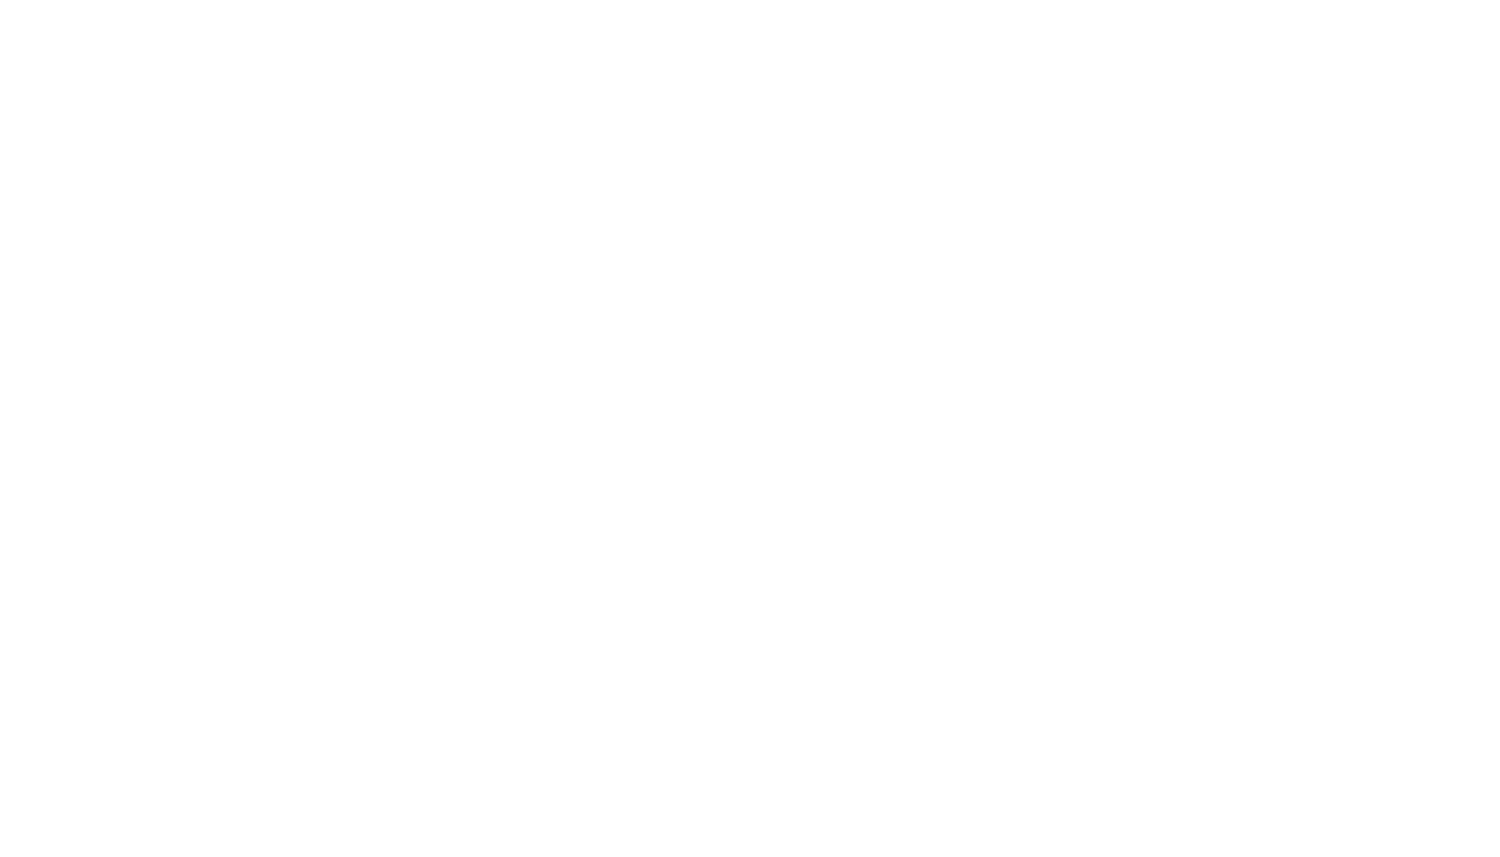 Champers Social Club